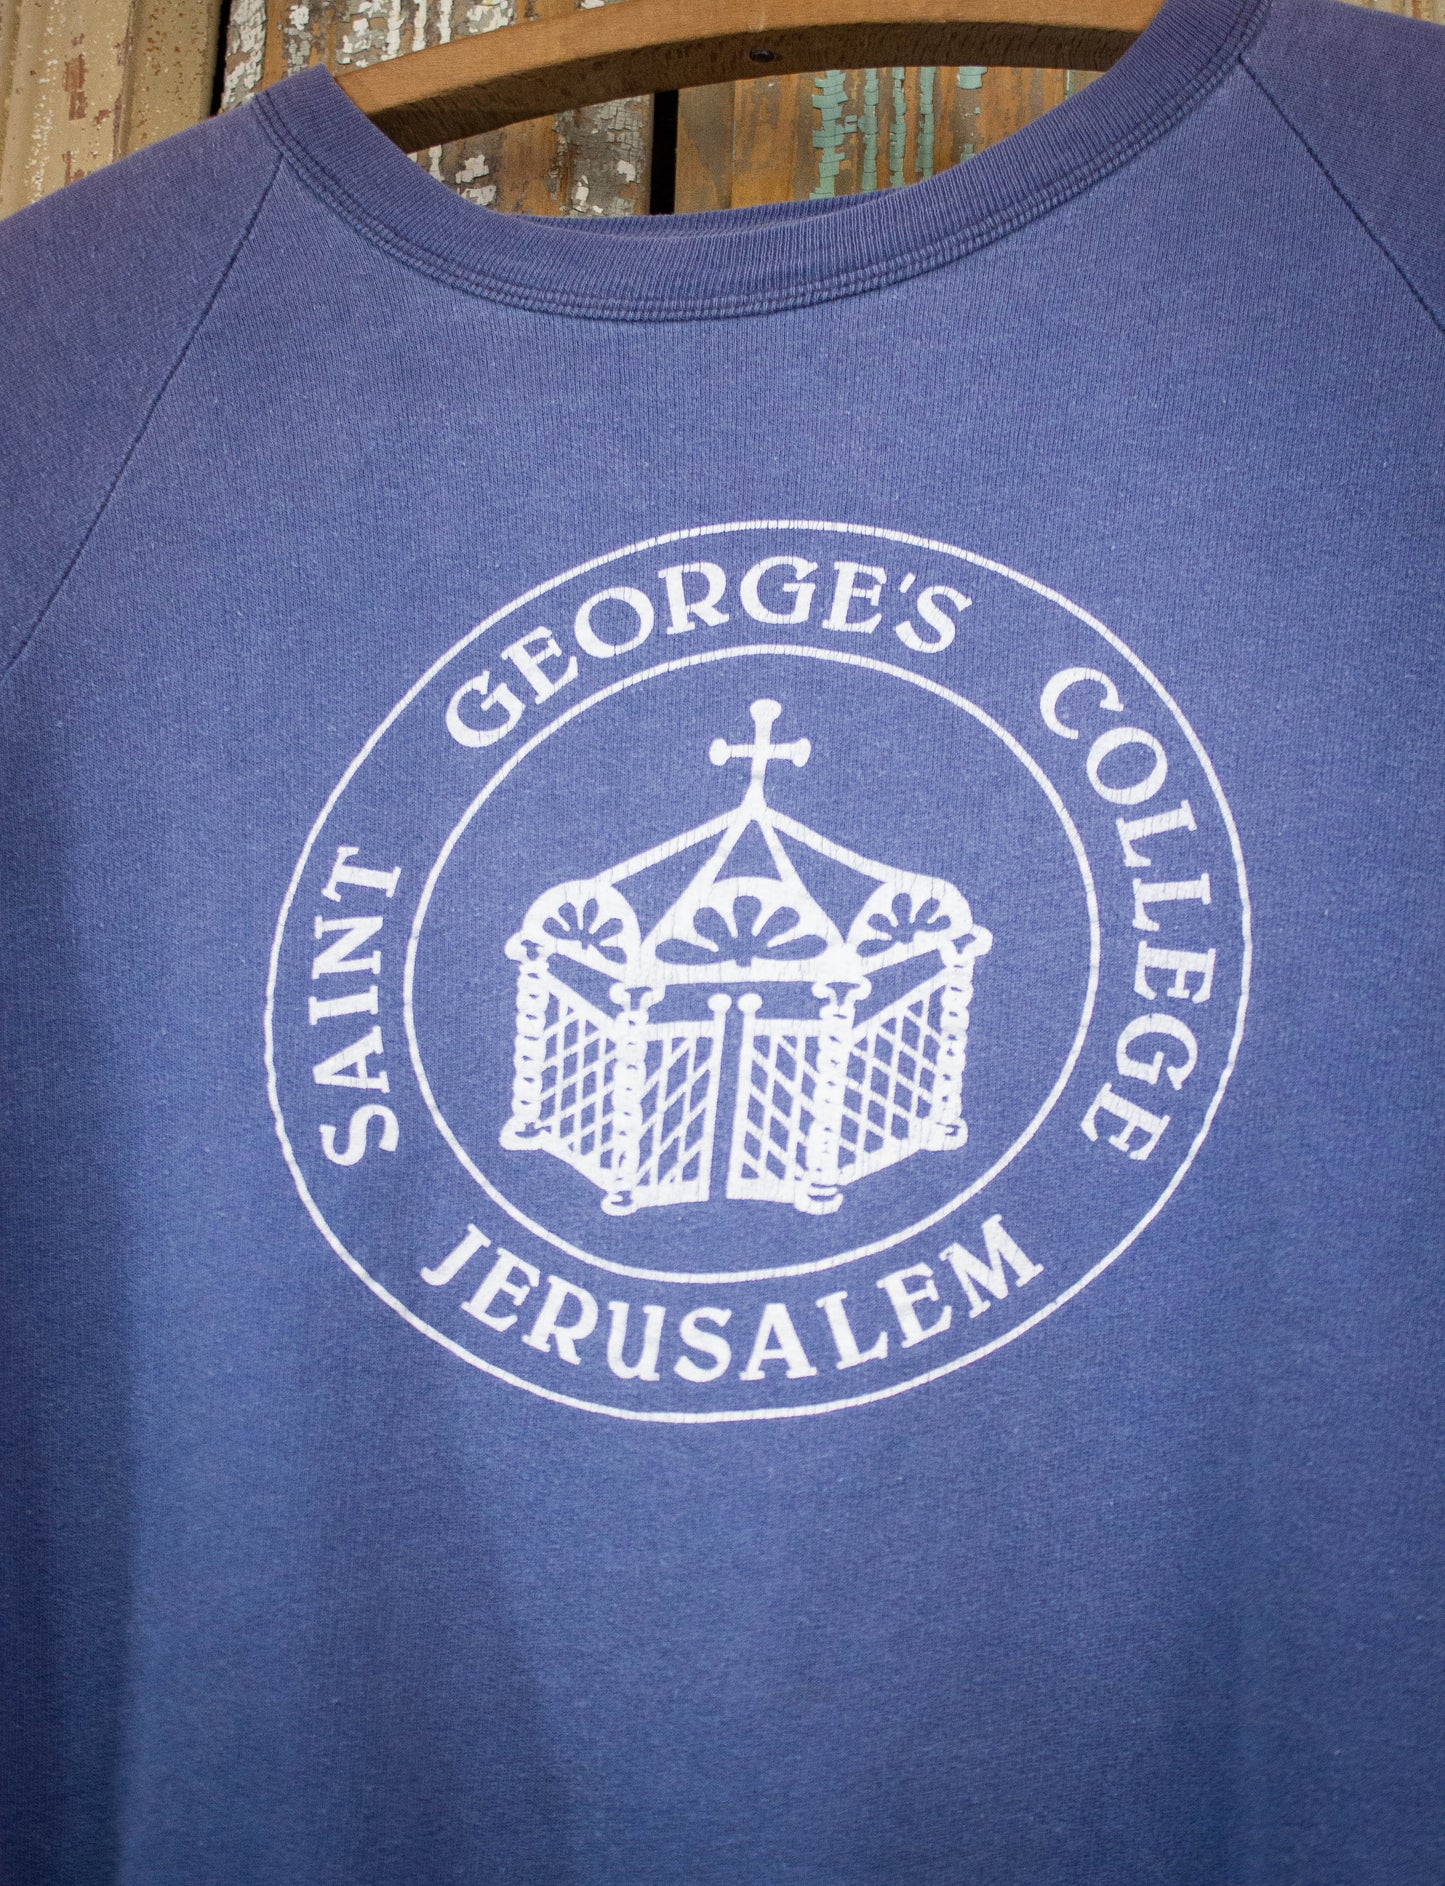 Vintage St. George's College Graphic Sweatshirt 70s Blue Small-Medium